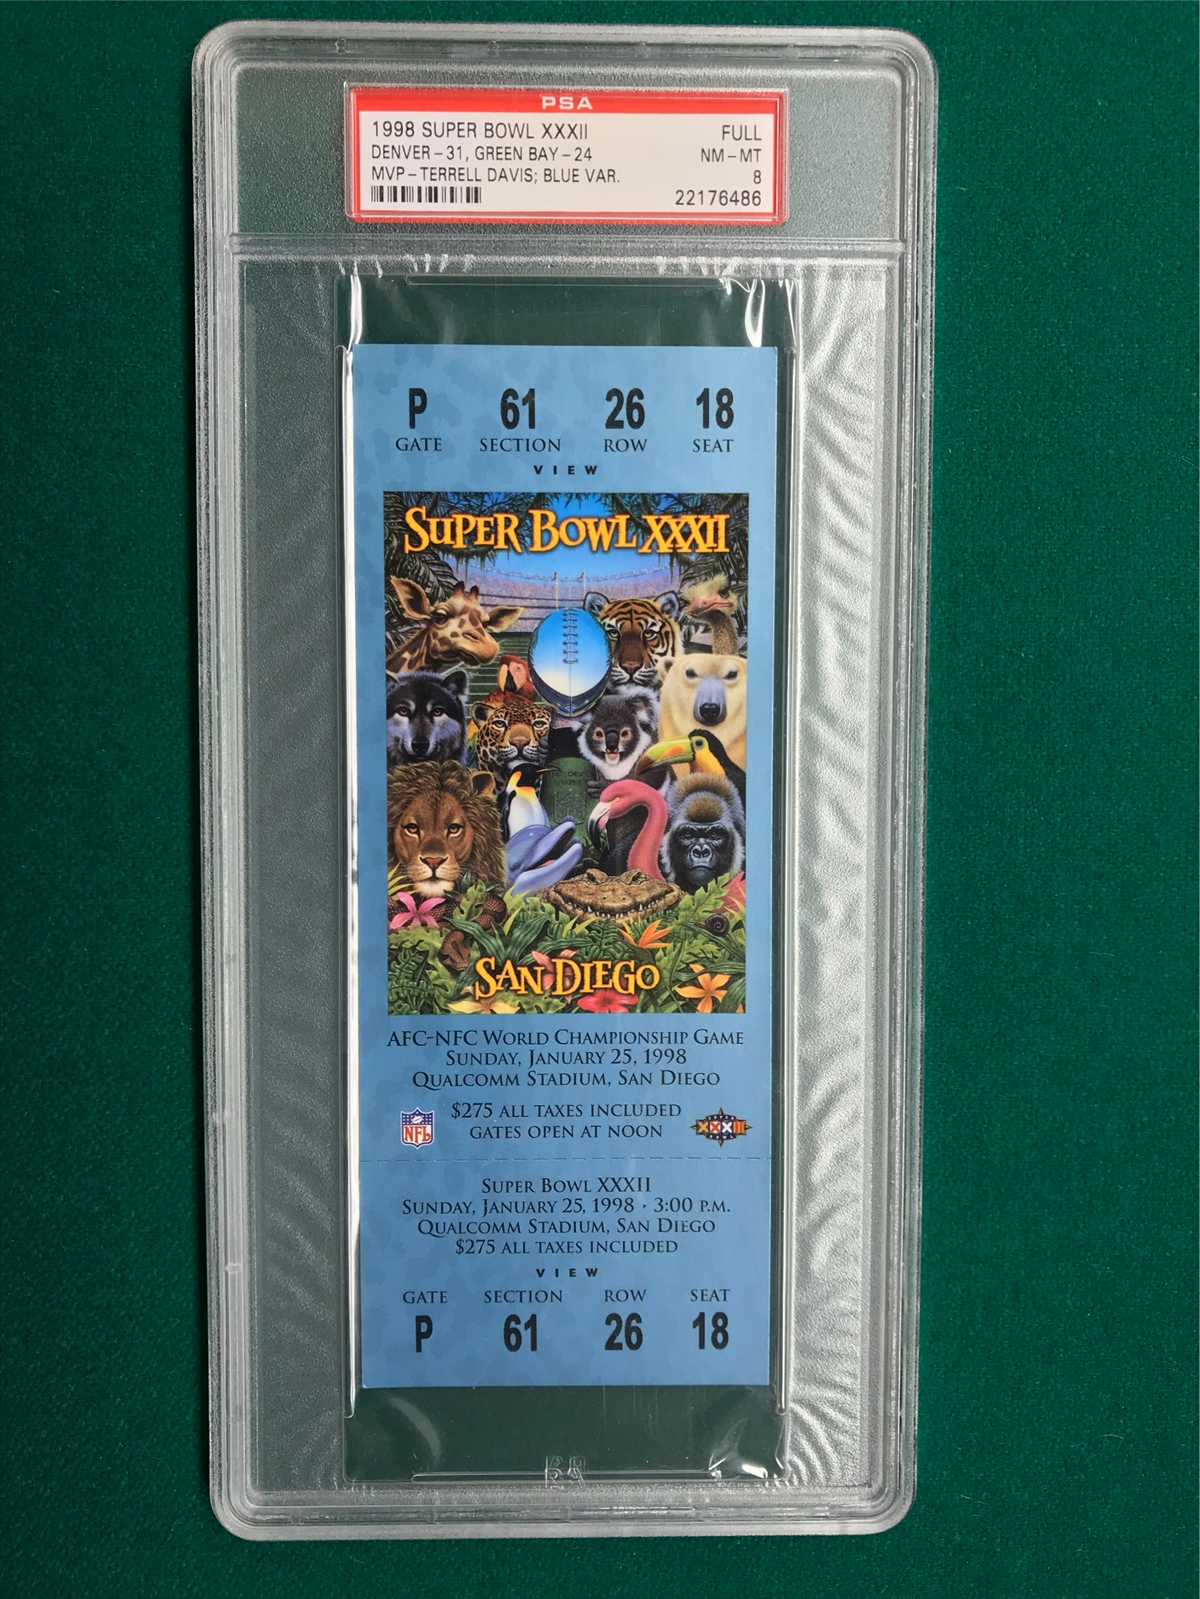 1999 Super Bowl XXXIII PSA 9 ticket 